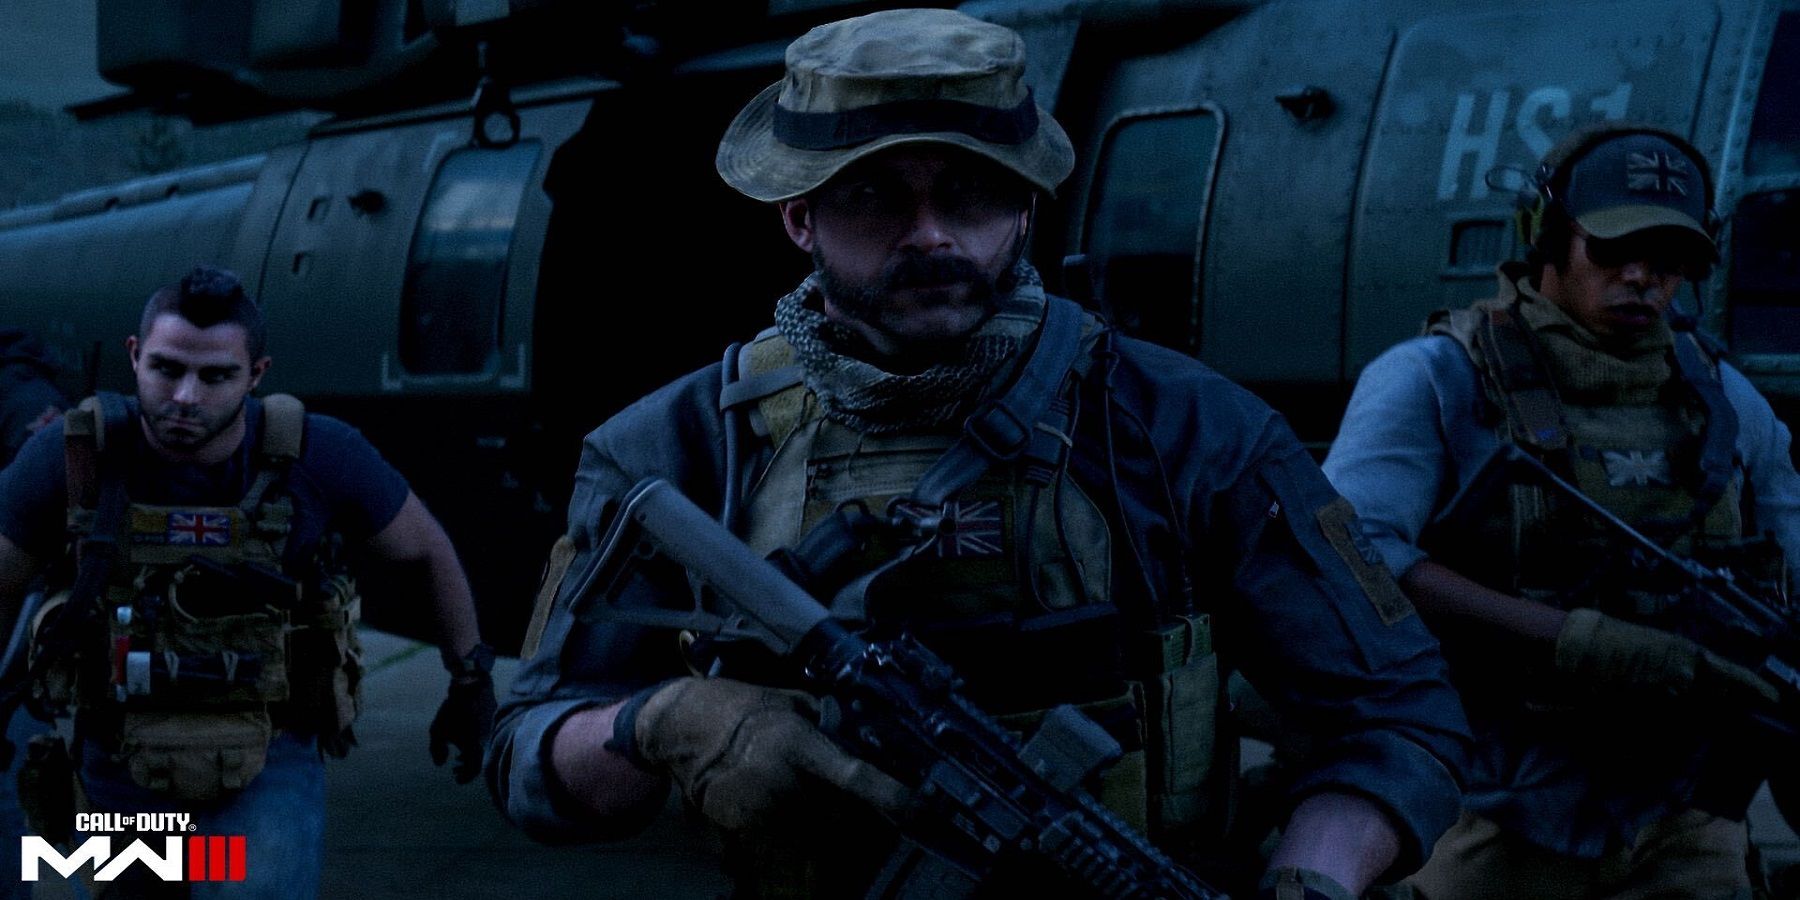 Modern Warfare 3 sales are down 25% from last year - Xfire